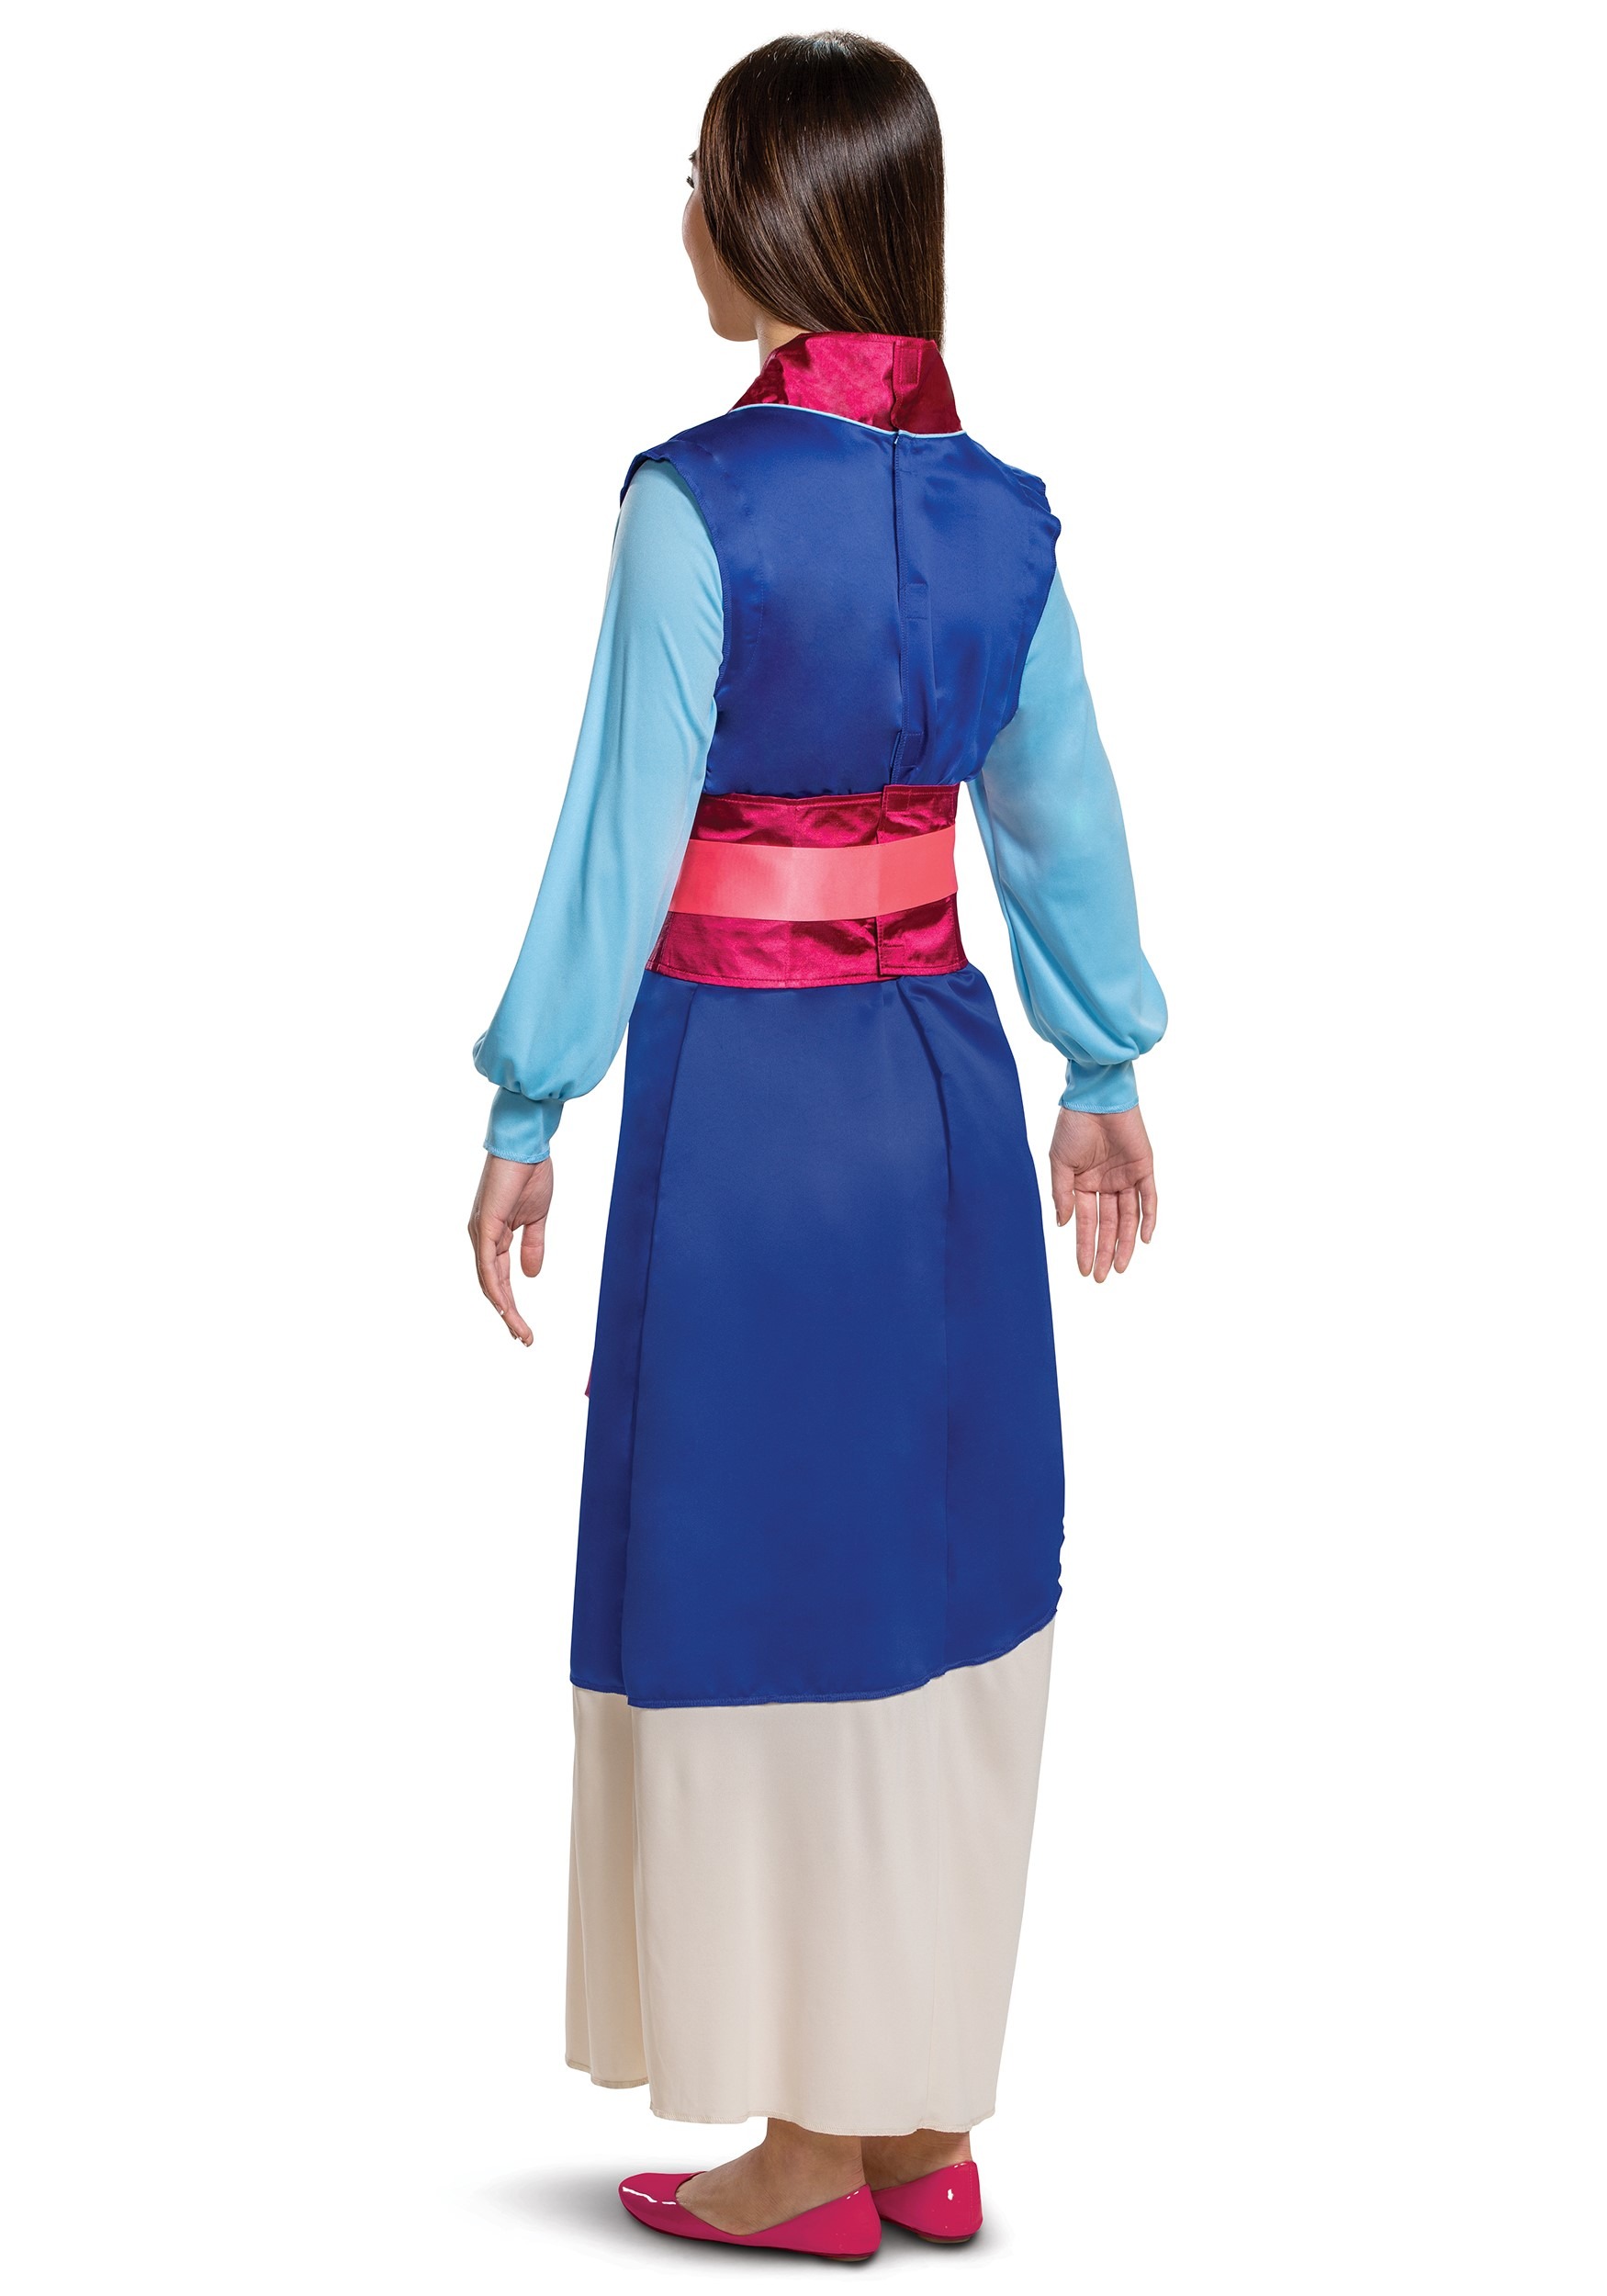 Mulan Blue Dress Fancy Dress Costume For Women